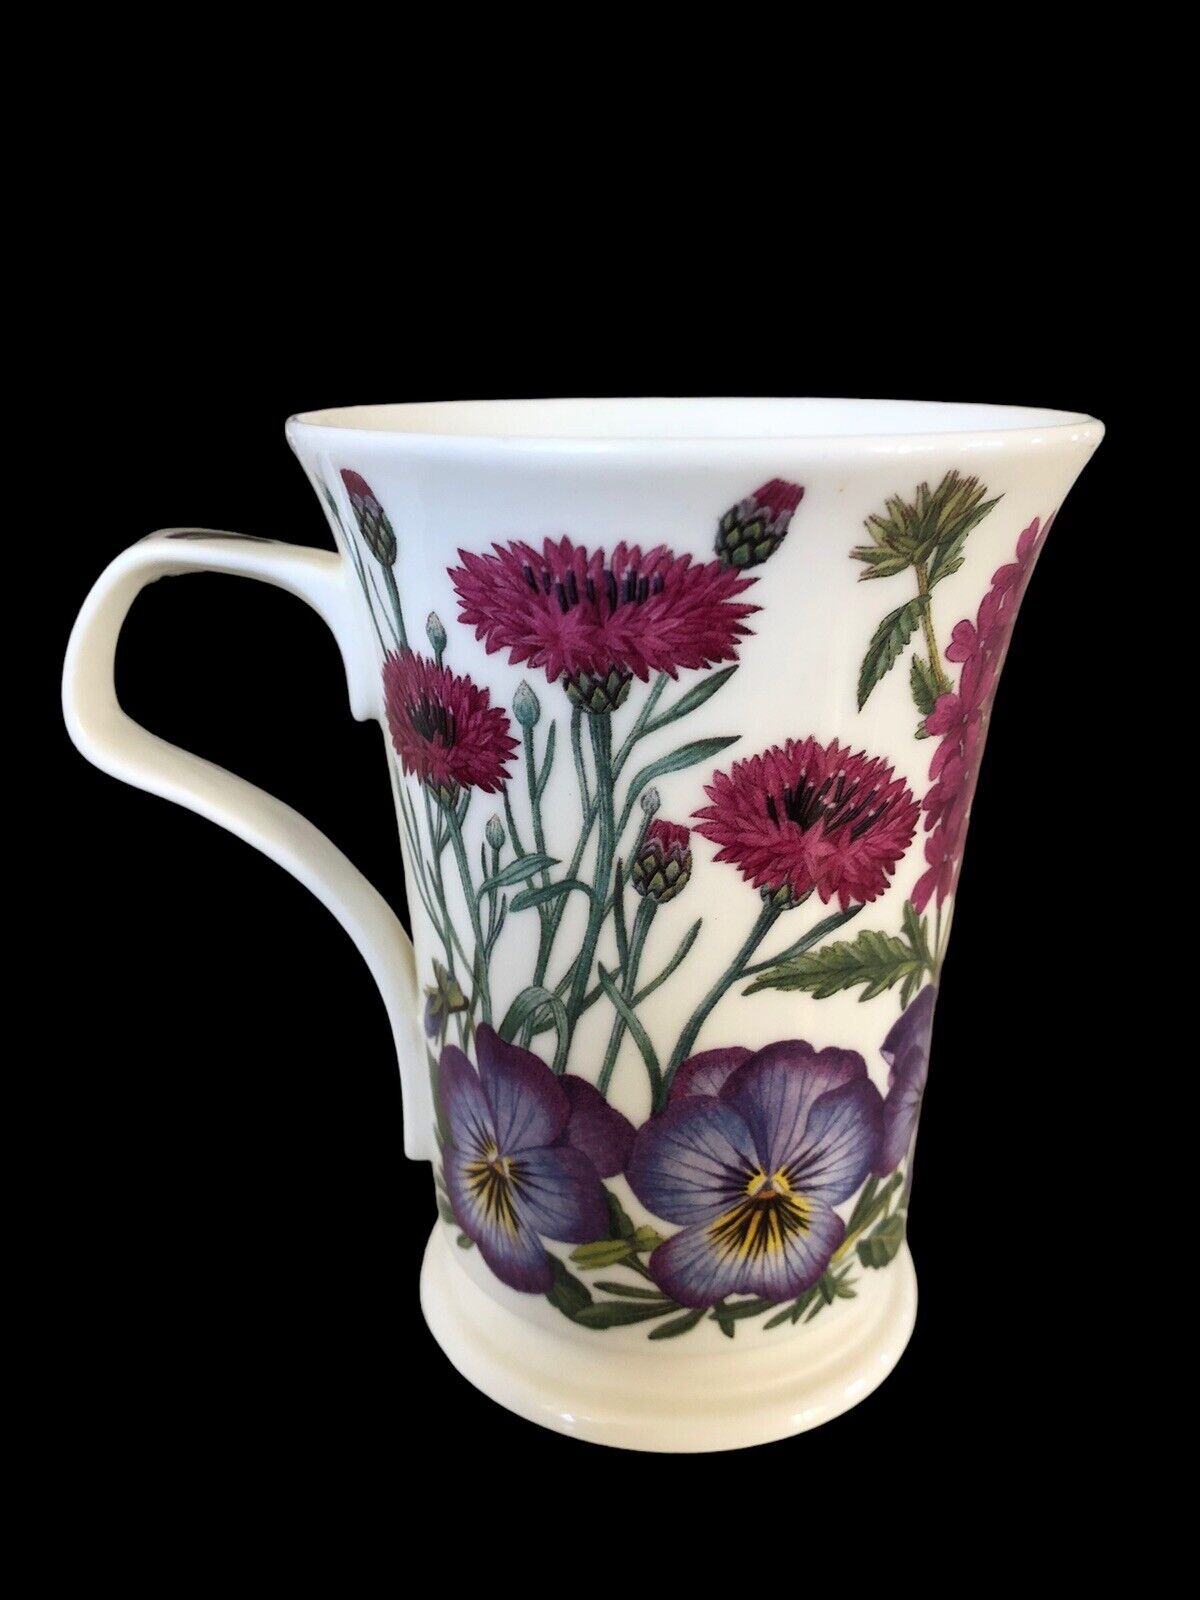 Dunoon L'ete Floral Mug By Kathy Pickles England Bone China Purple Flowers 4.5”